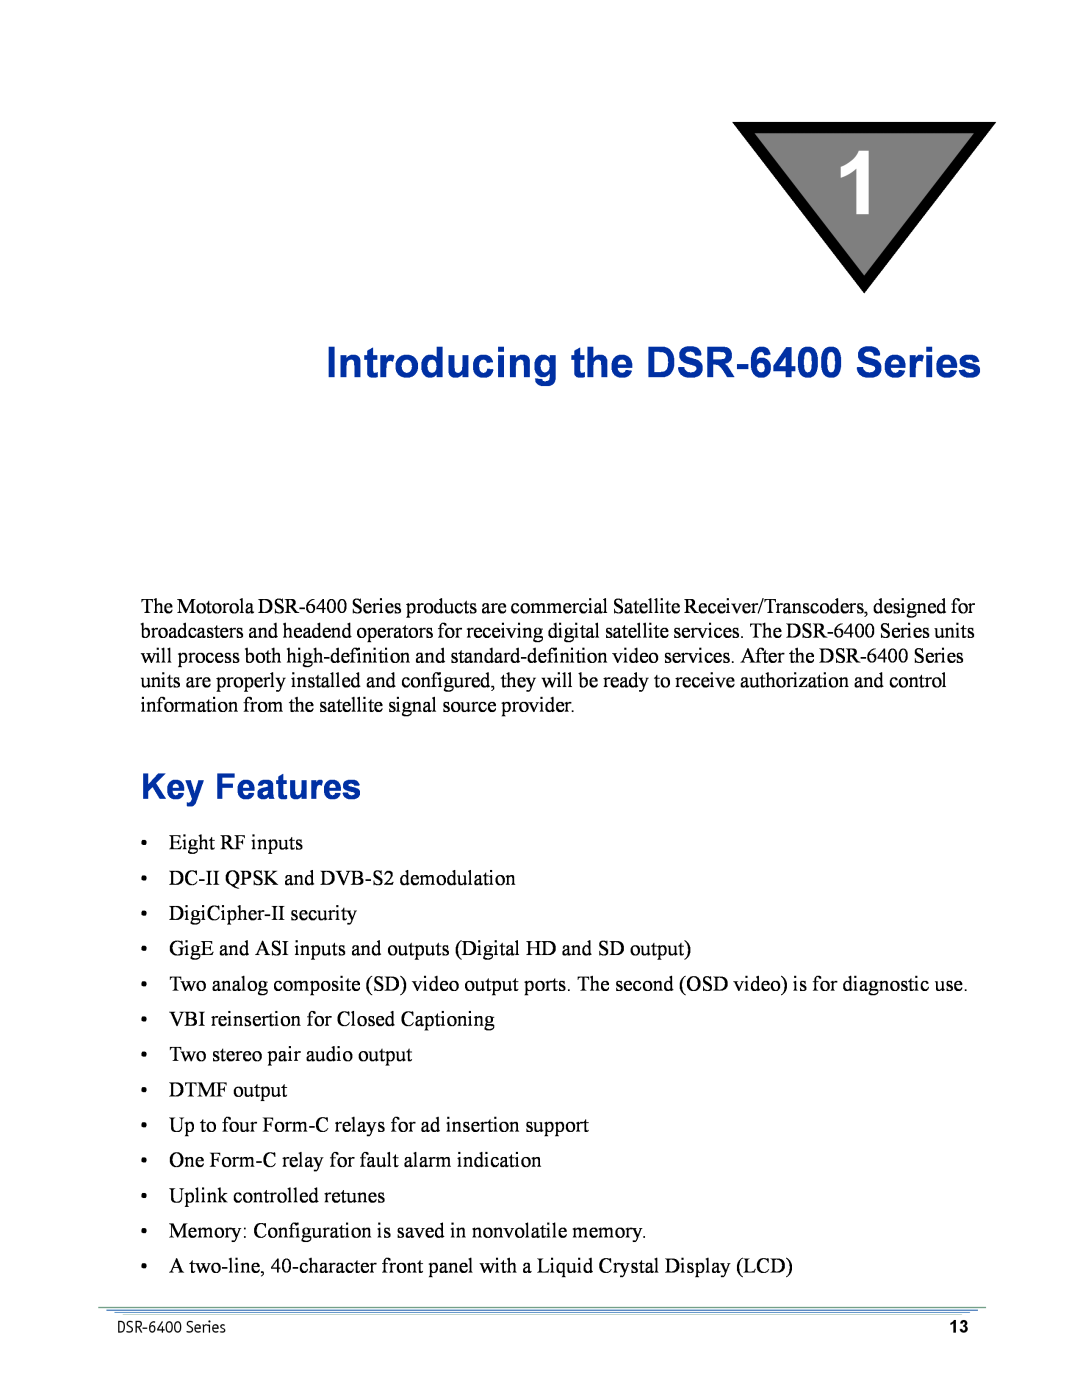 Motorola manual Introducing the DSR-6400Series, Key Features 